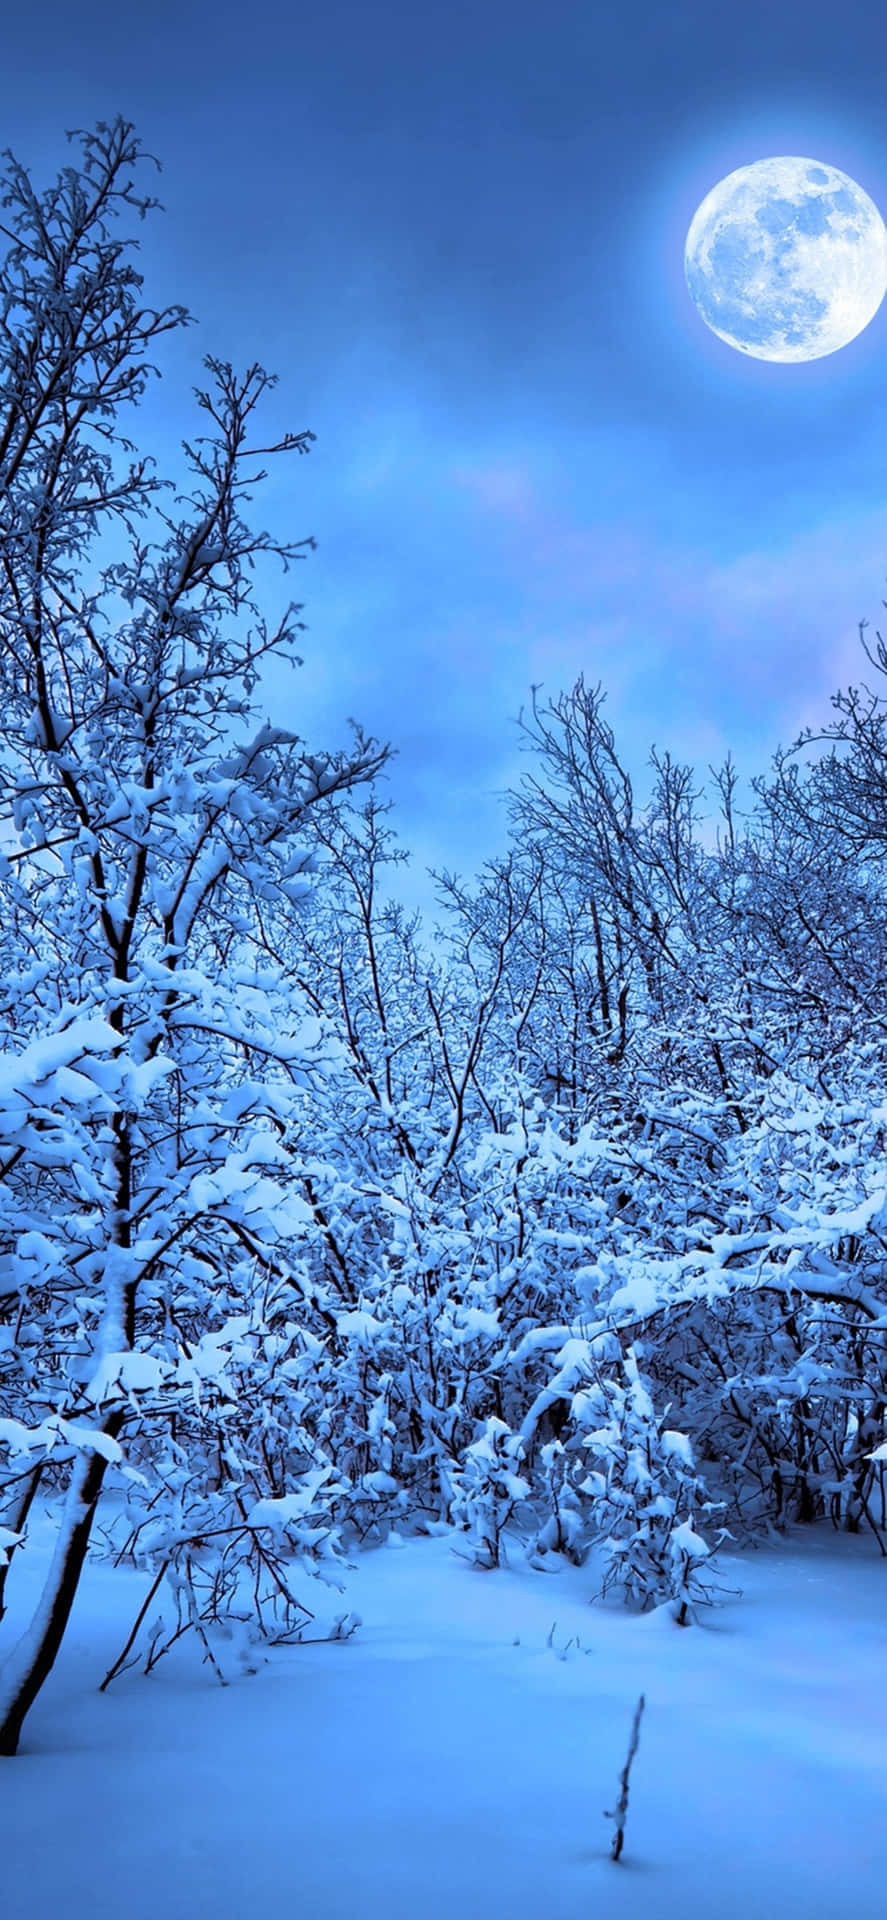 Snowy Nature 4K iPhone Wallpaper